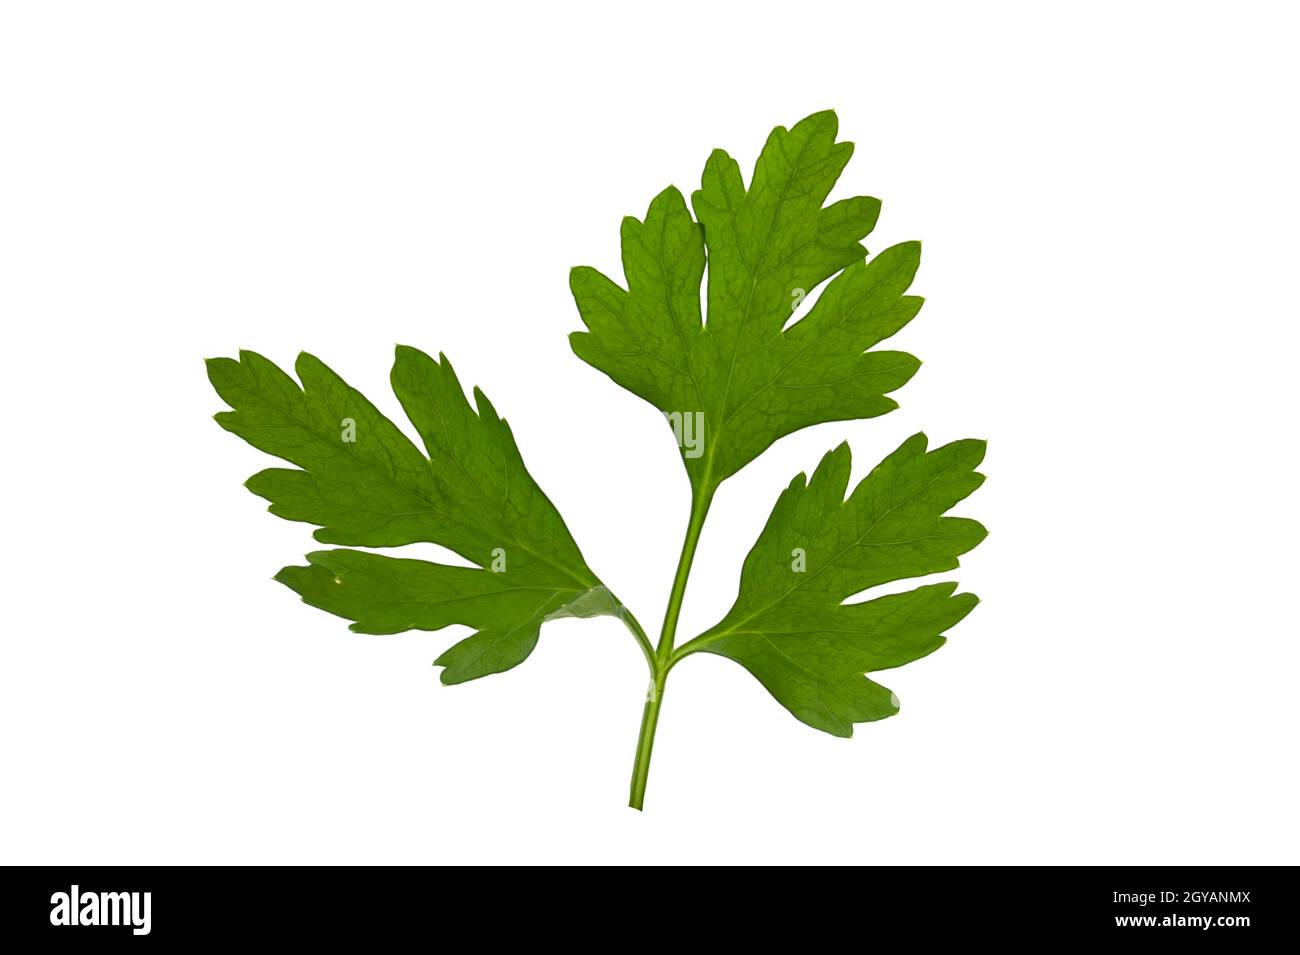 Close-up leaf of fresh green parsley isolated on white background Stock Photo